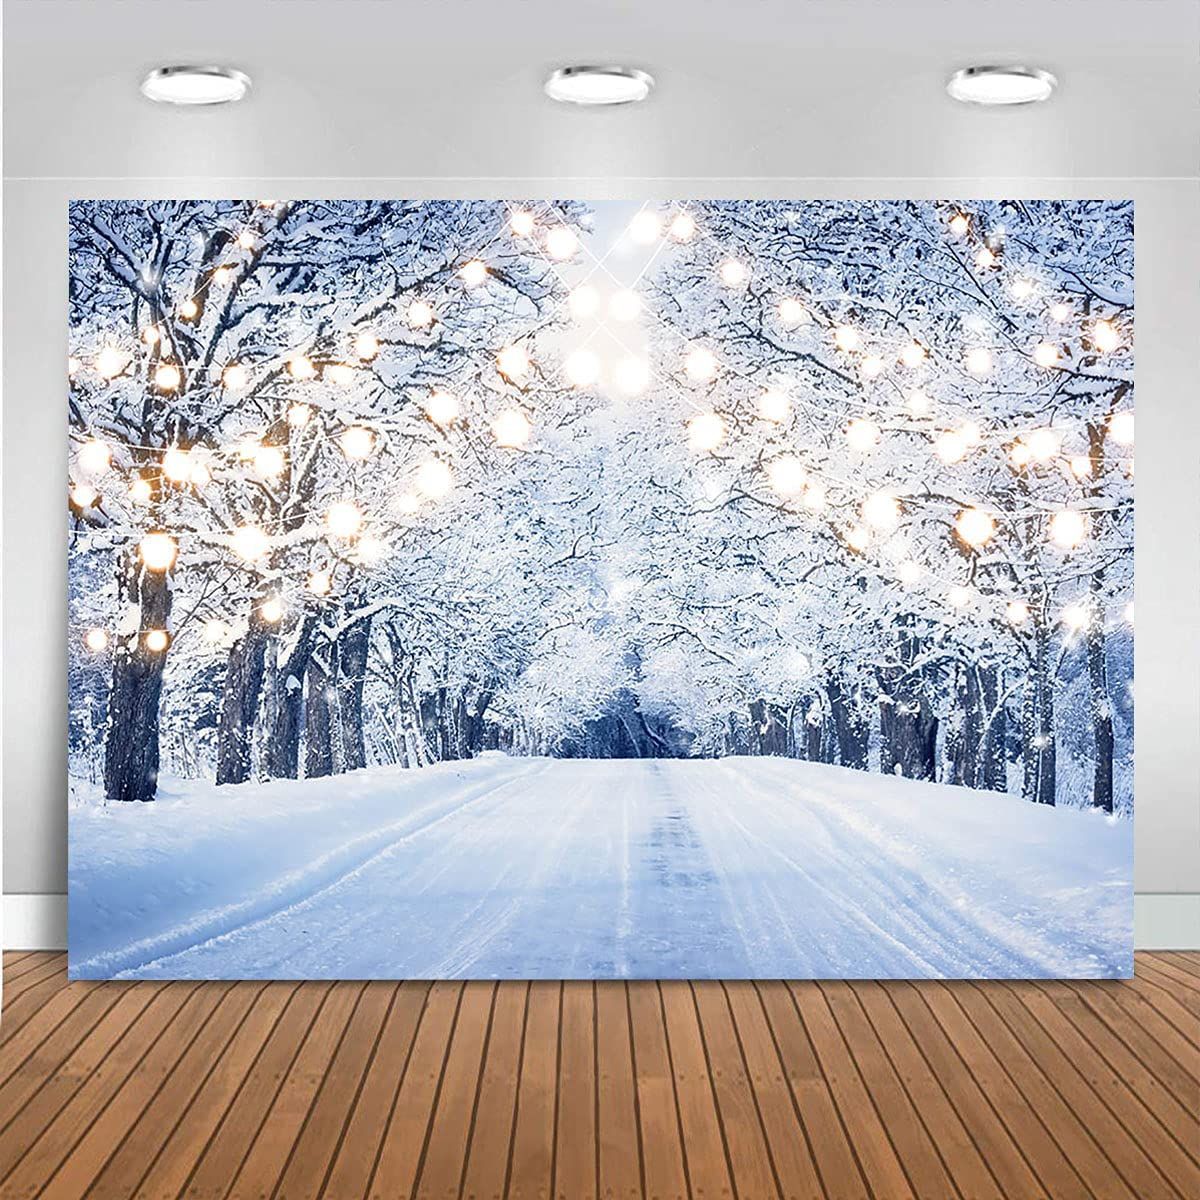 Lighted Snowy Street Backdrop